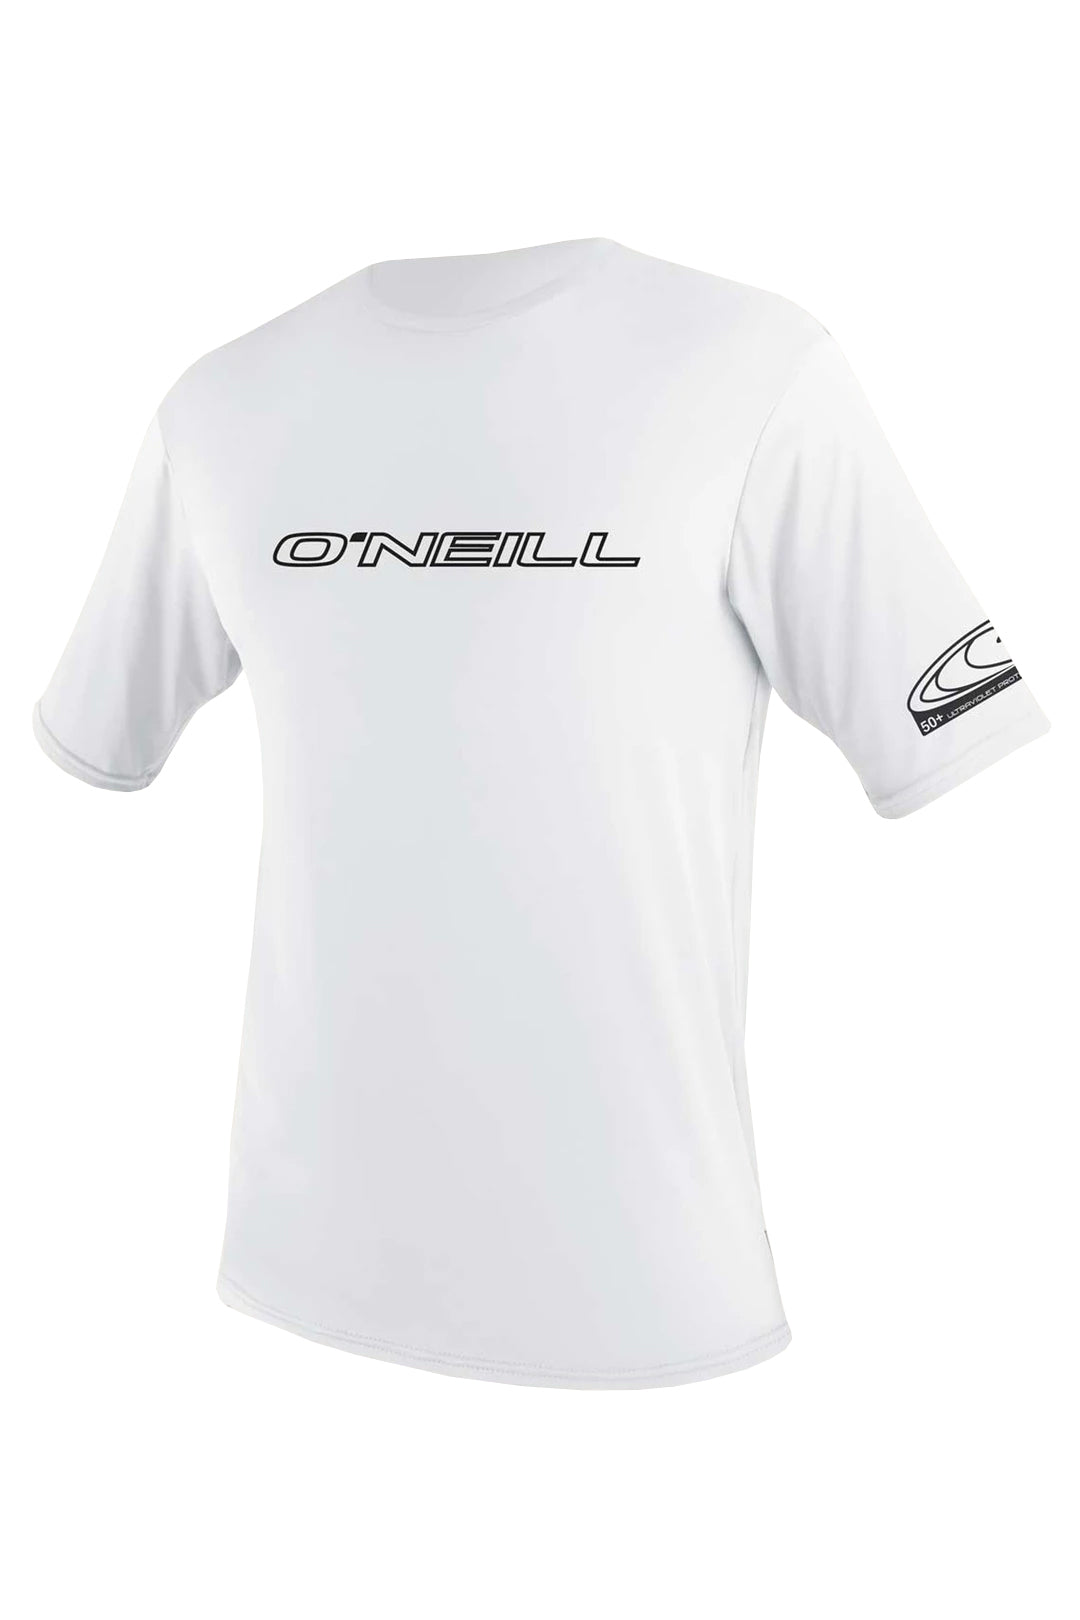 O'Neill Youth Basic Skins 50 SS Sun Shirt 009-Graphite 14